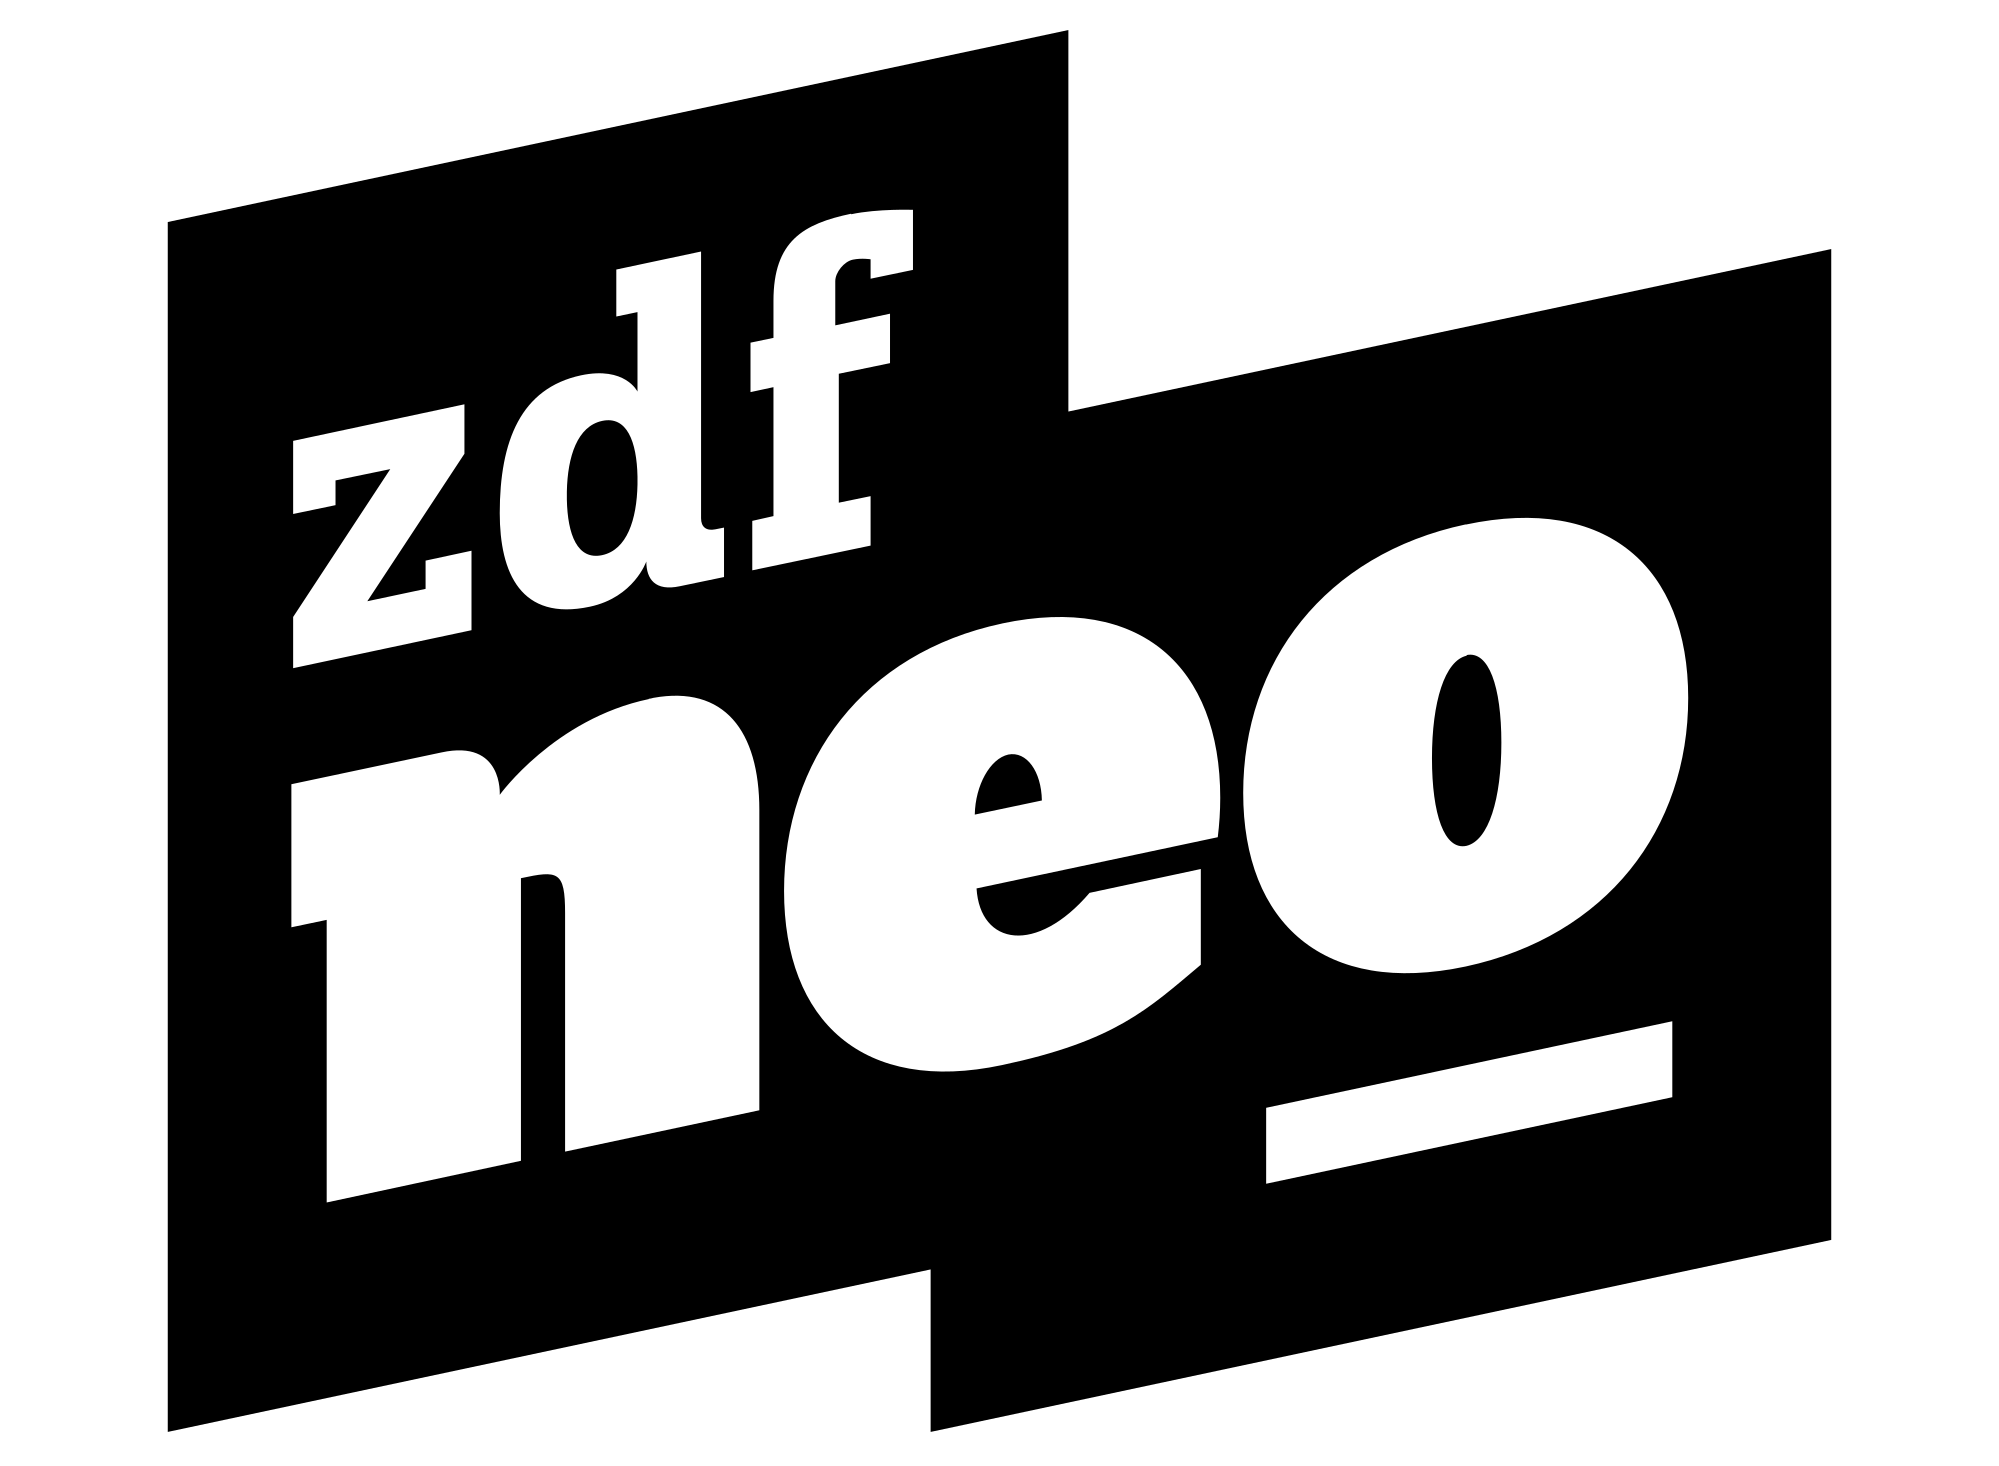 ZDFneo - company